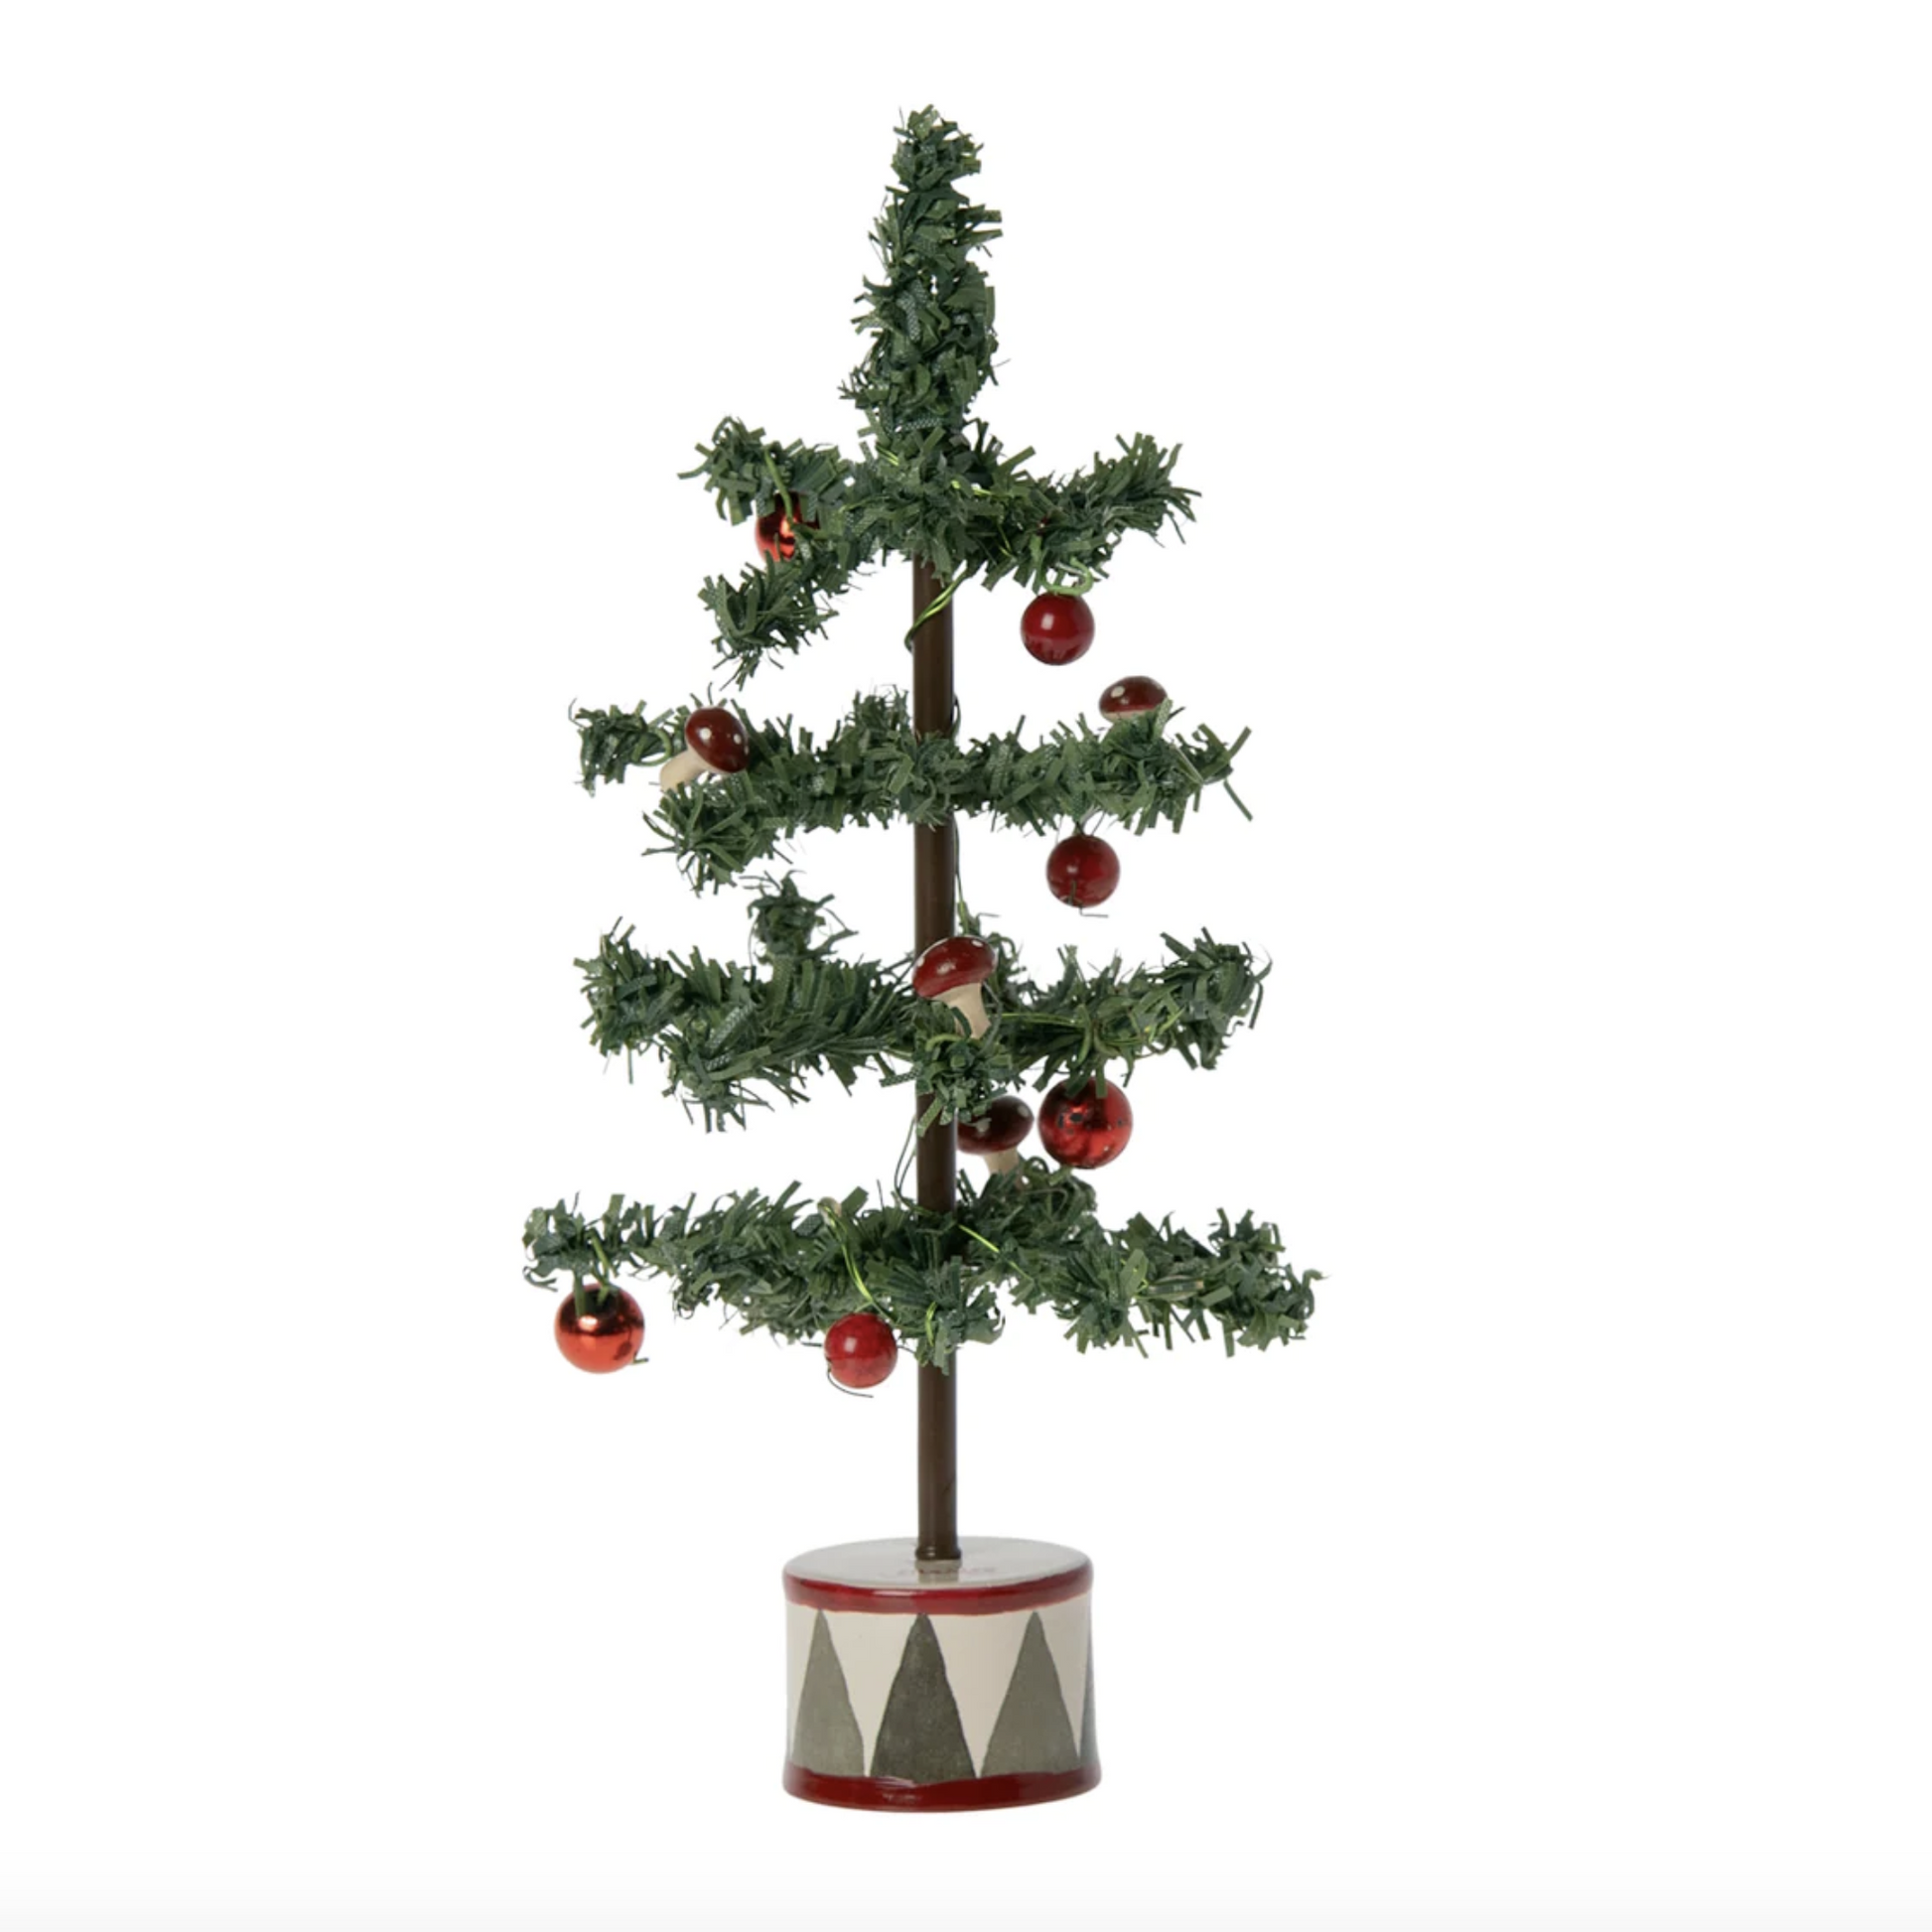 Maileg Christmas Tree with LED Lights, Mouse PRE-ORDER eta Dec 23 (8460645892383)